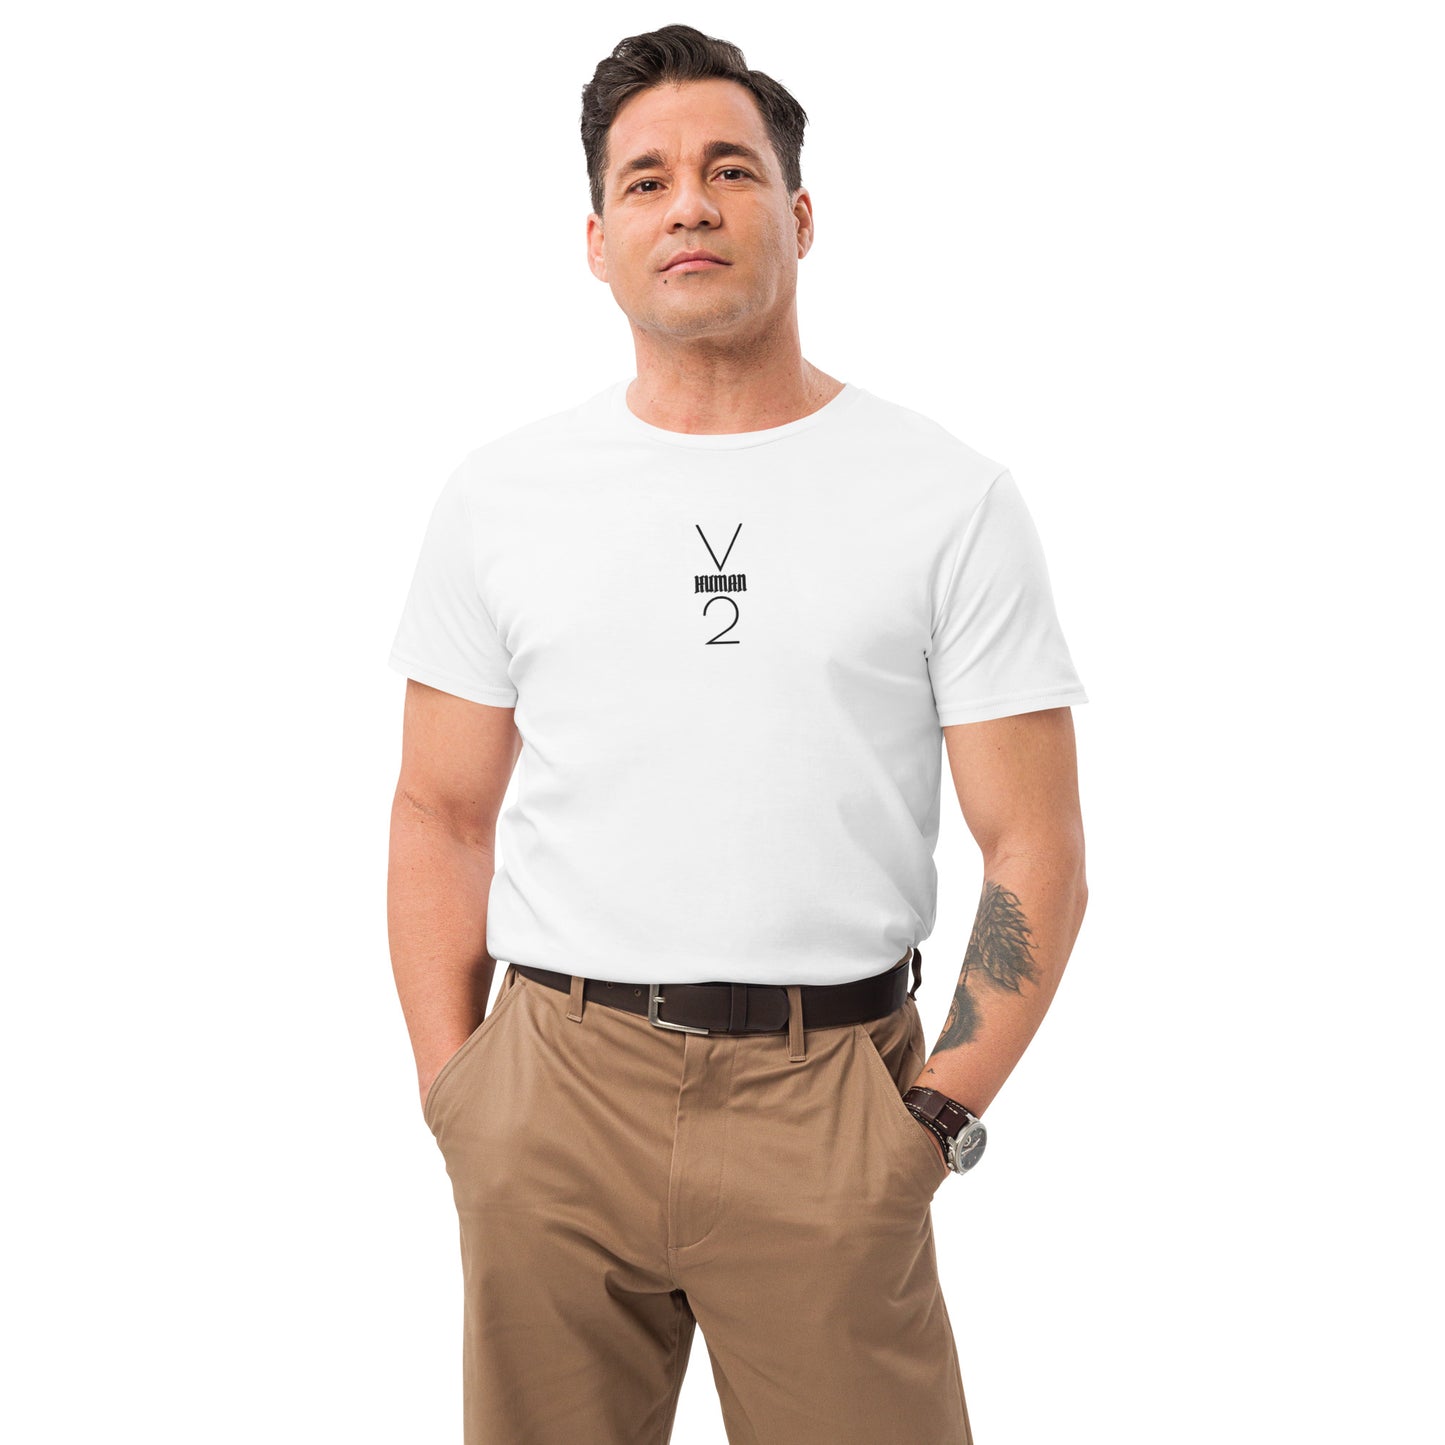 Men's "Human V2" premium cotton t-shirt